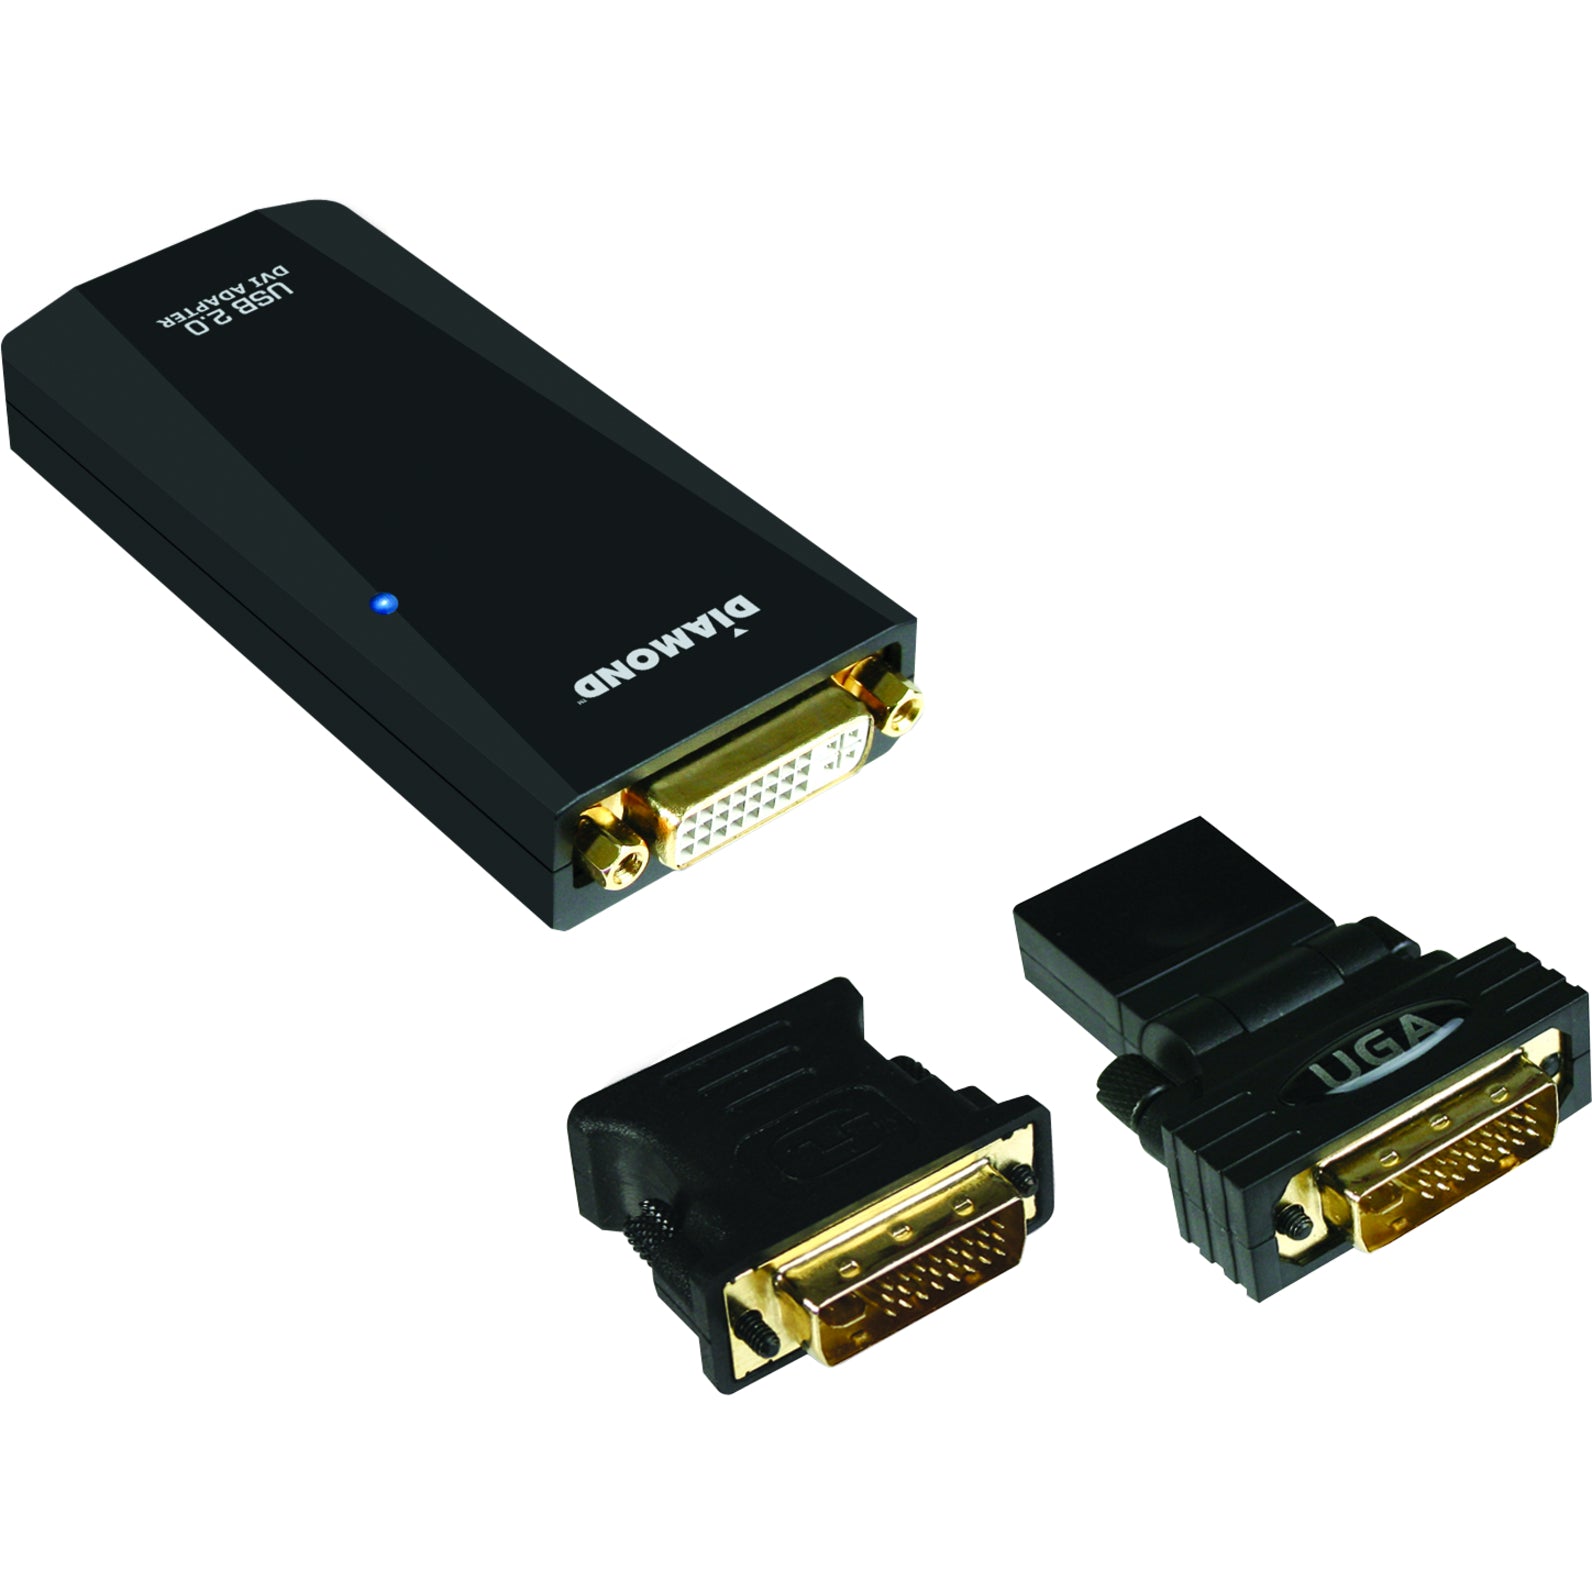 DIAMOND BVU165LT USB 2.0 to VGA / DVI / HDMI Video Graphics Adapter, 1920 x 1080 Supported, Black [Discontinued]